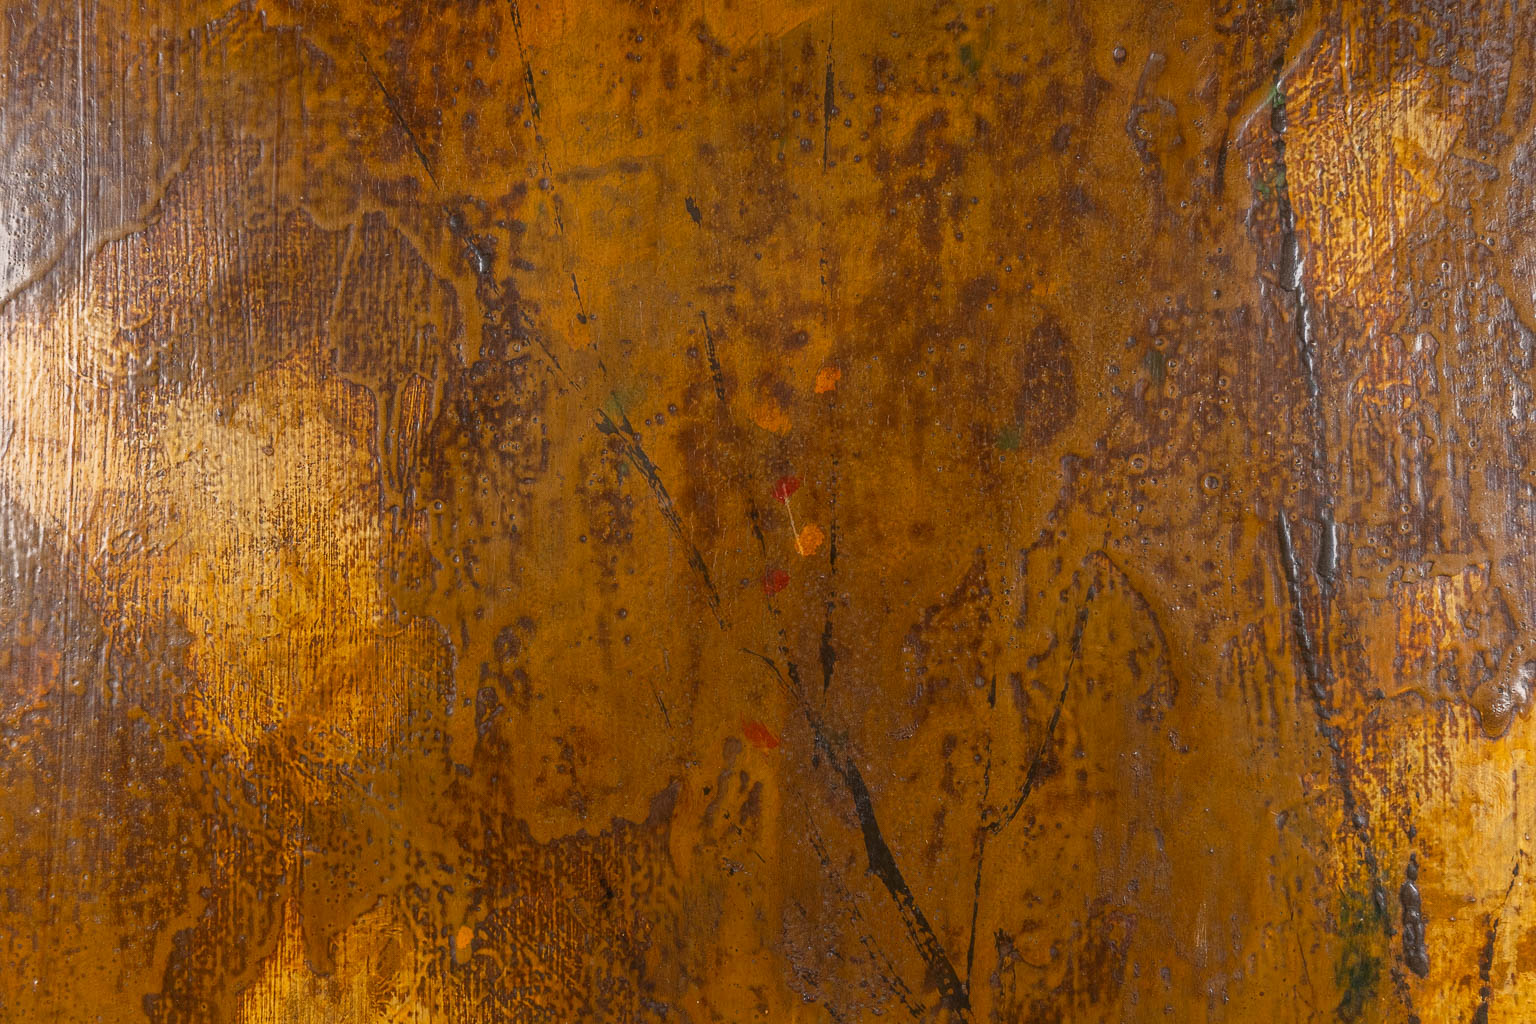 Paul HAGEMANS (1884-1959) 'Spring' oil on board. (W:87 x H:118 cm)